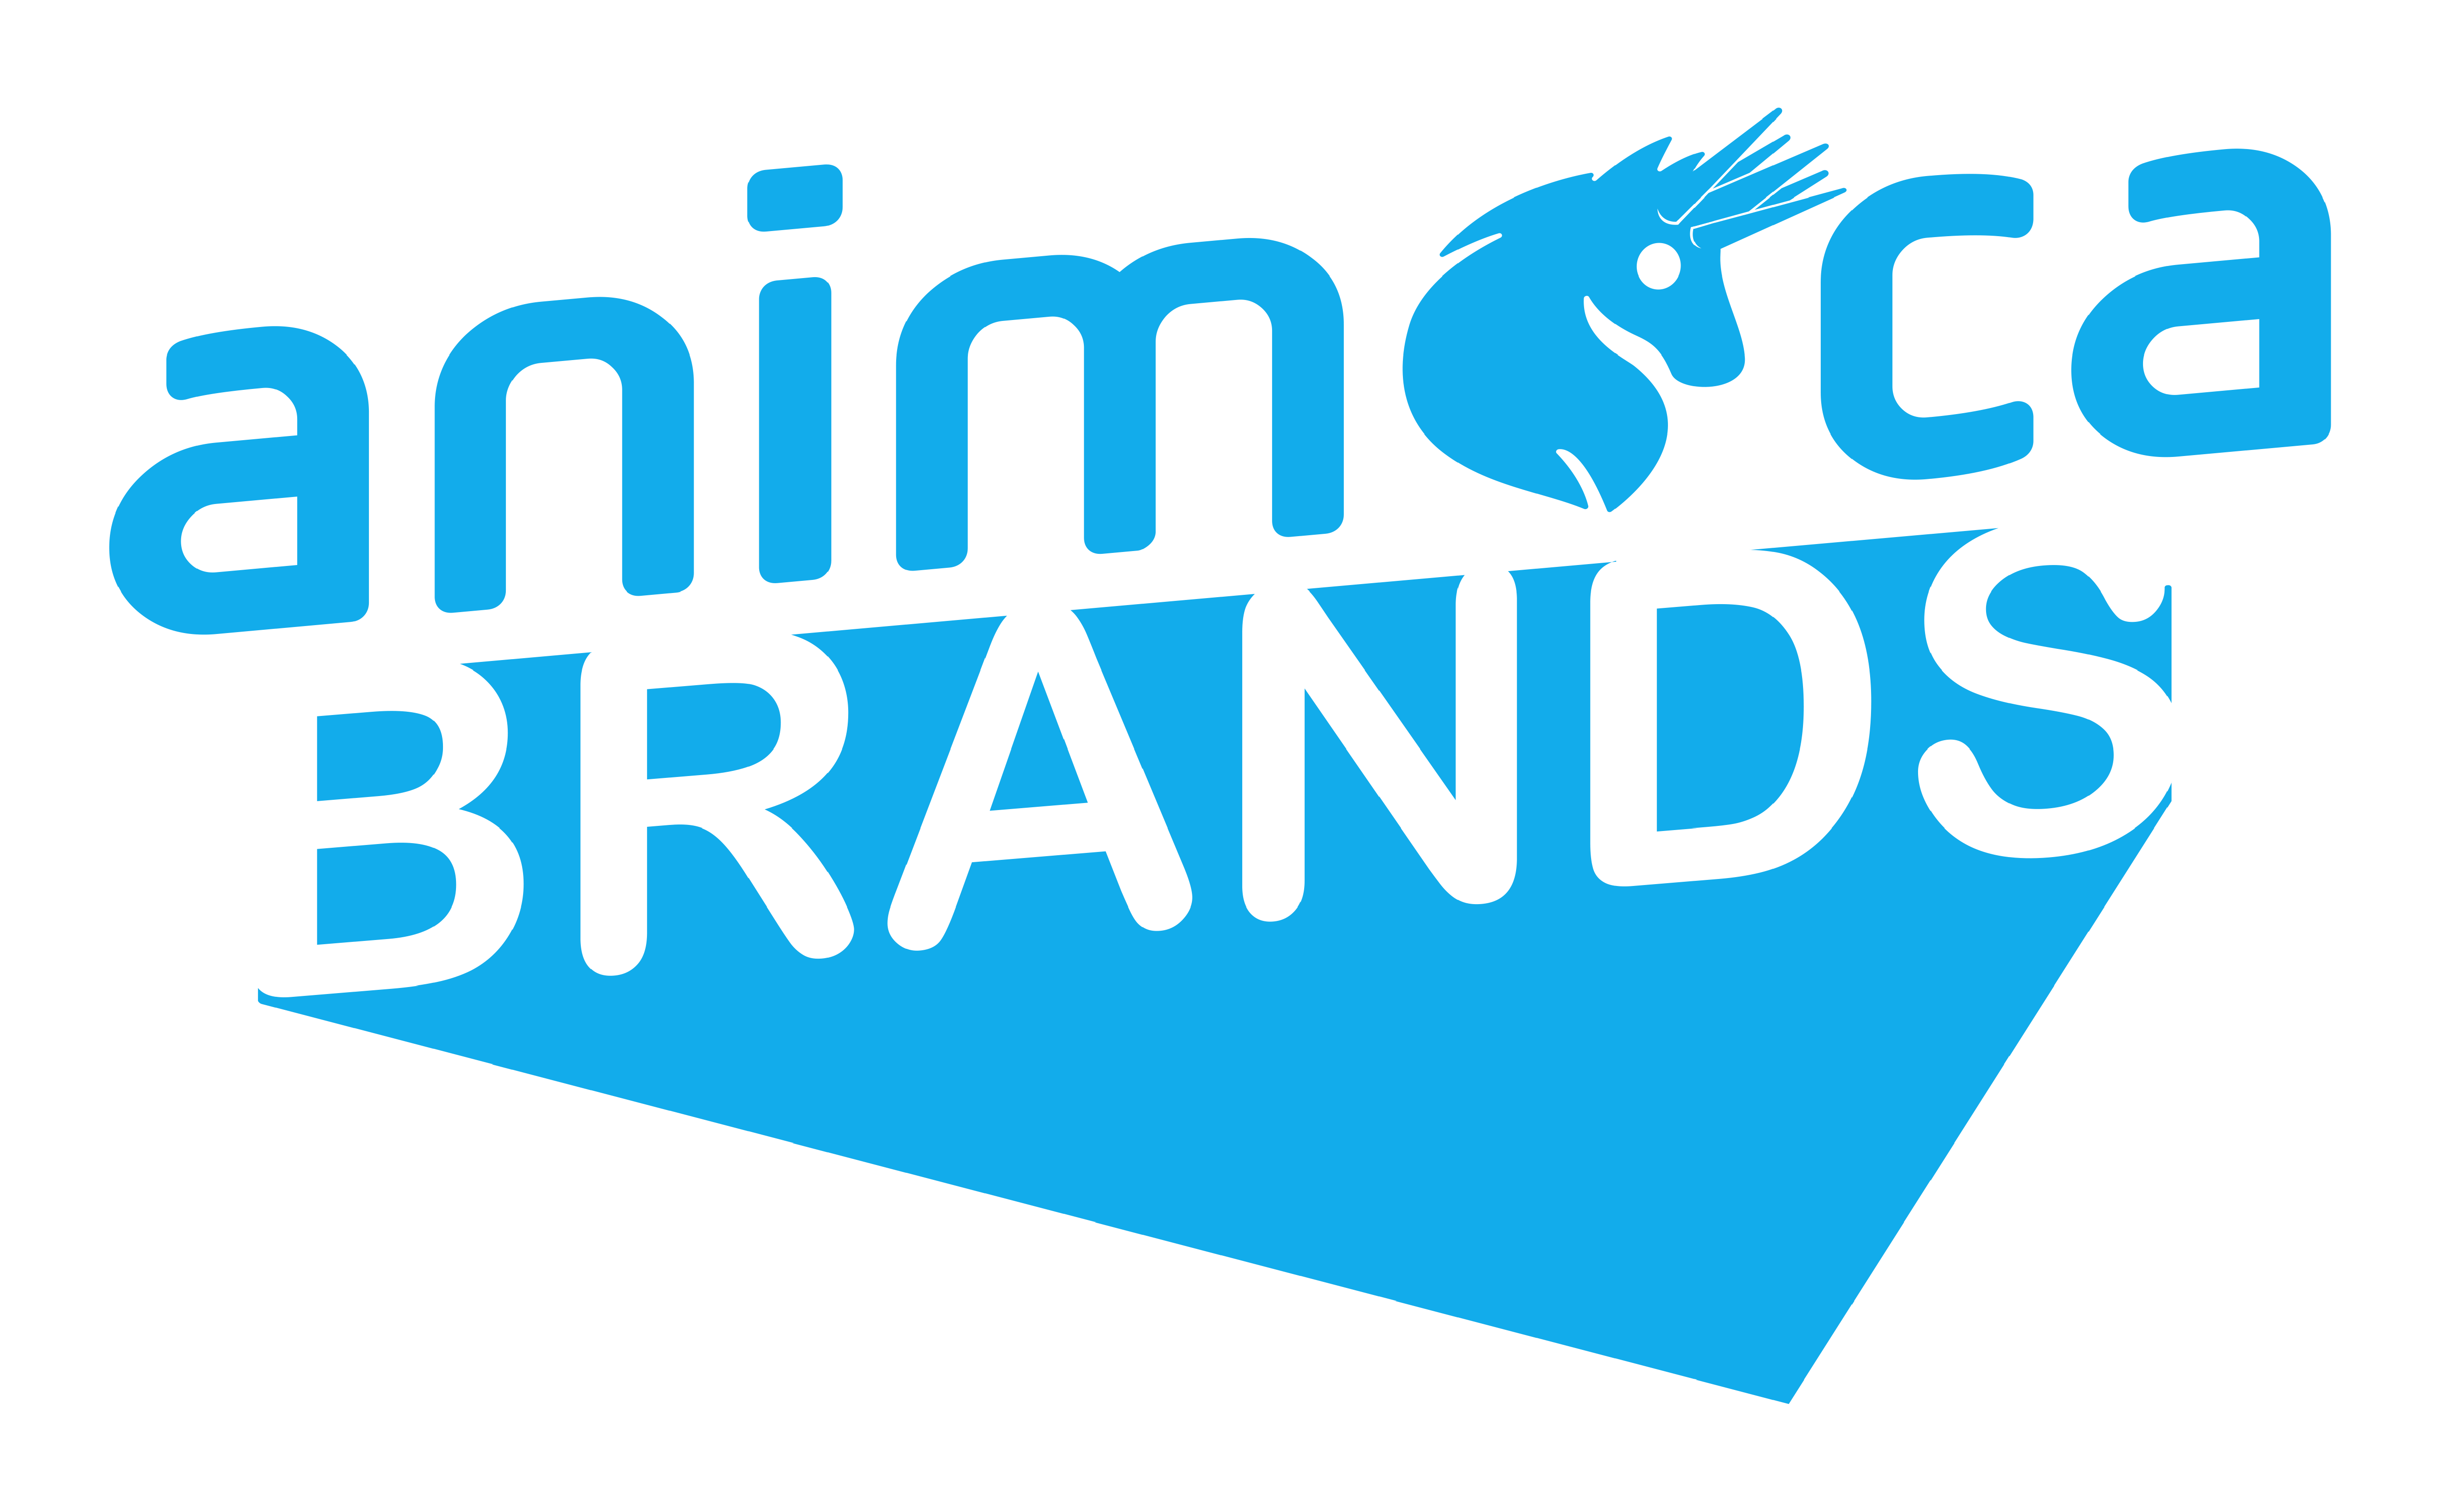 Animoca Brands ওপেন মেটাভার্স প্লেটোব্লকচেন ডেটা ইন্টেলিজেন্স বাড়াতে US$359B মূল্যায়নে US$5 মিলিয়ন সংগ্রহ করেছে। উল্লম্ব অনুসন্ধান. আ.